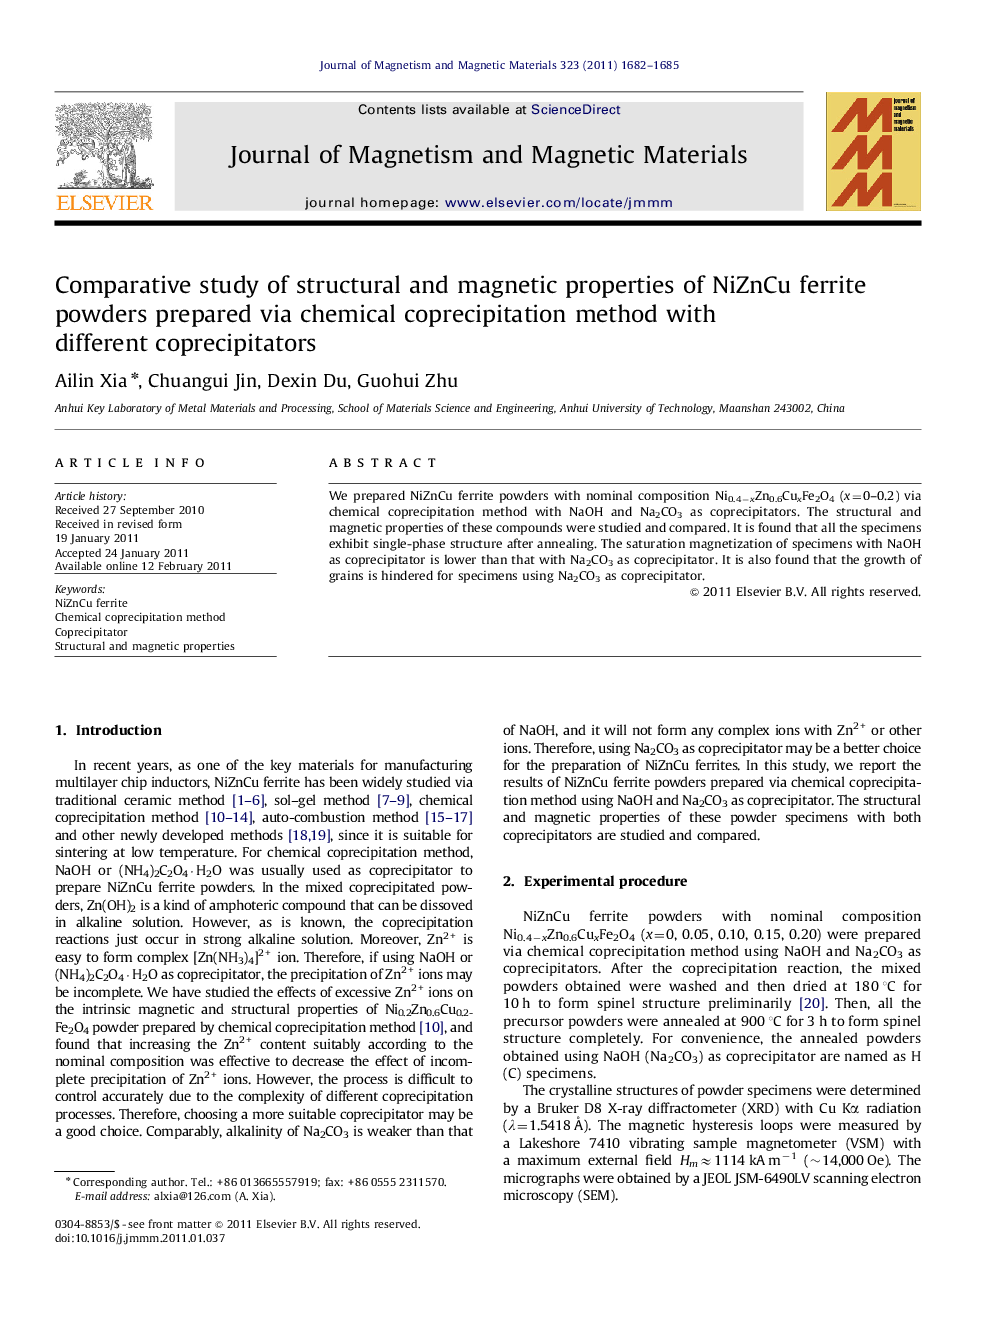 Comparative study of structural and magnetic properties of NiZnCu ferrite powders prepared via chemical coprecipitation method with different coprecipitators